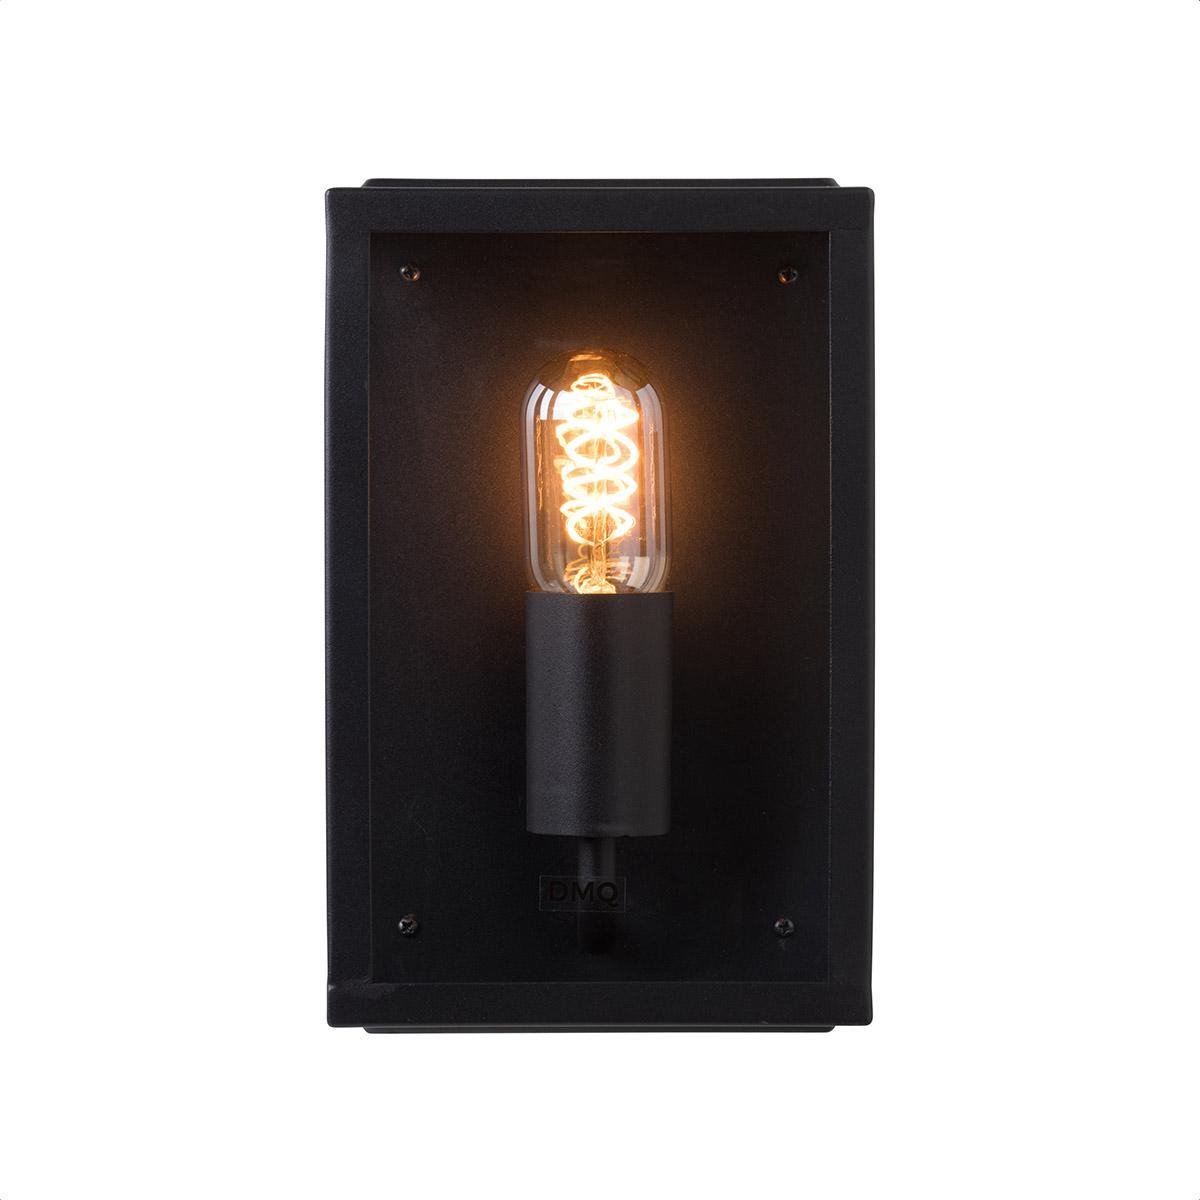 DMQ Buitenlamp Boston 25cm - IP44 Wandlamp Zwart Industrieel met Glas - E27